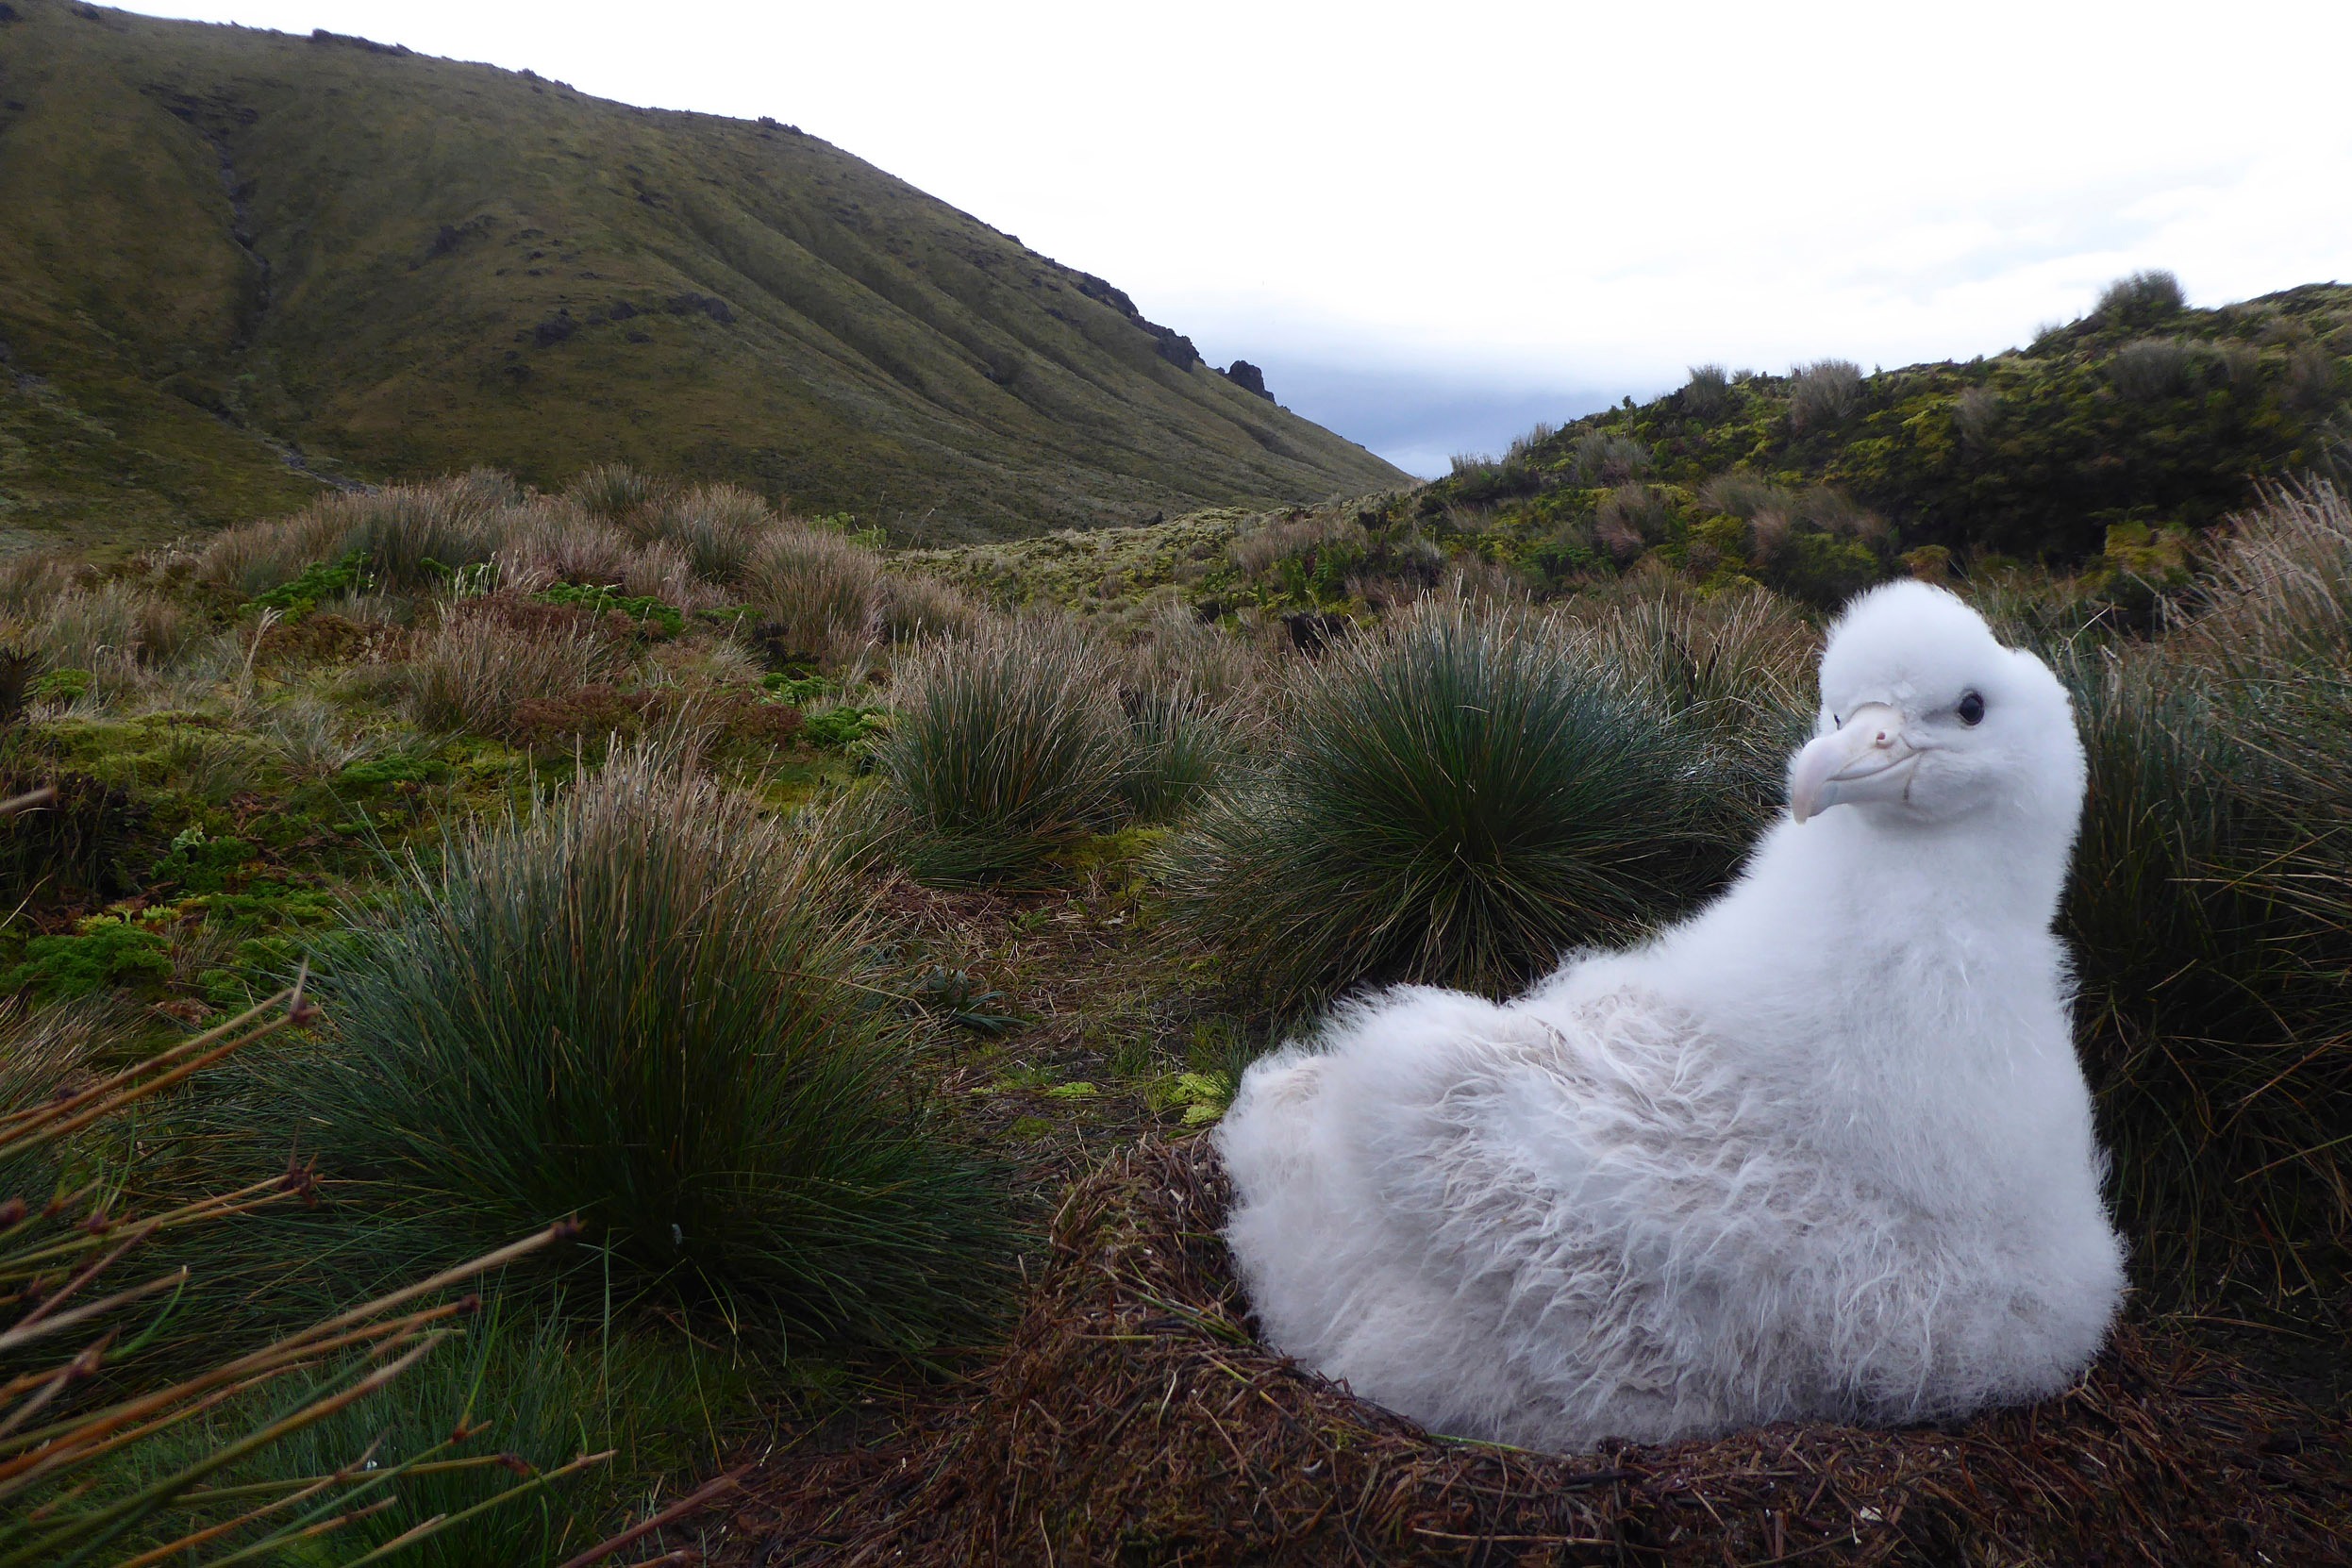 A Juvenile Tristan Albatross perched in their nest amongst the green hillsides of Gough Island.